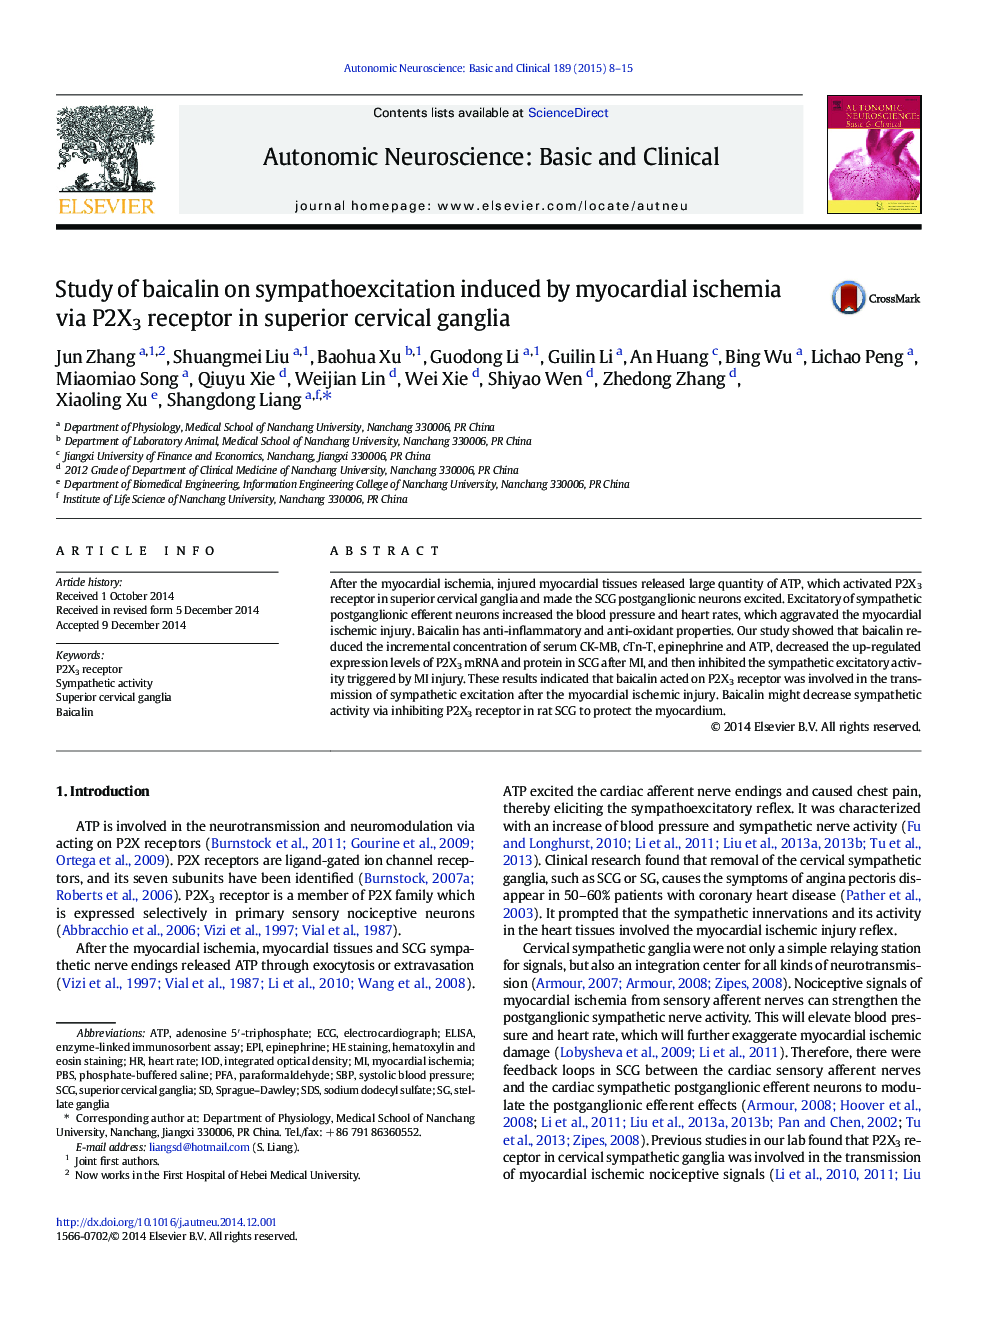 Study of baicalin on sympathoexcitation induced by myocardial ischemia via P2X3 receptor in superior cervical ganglia